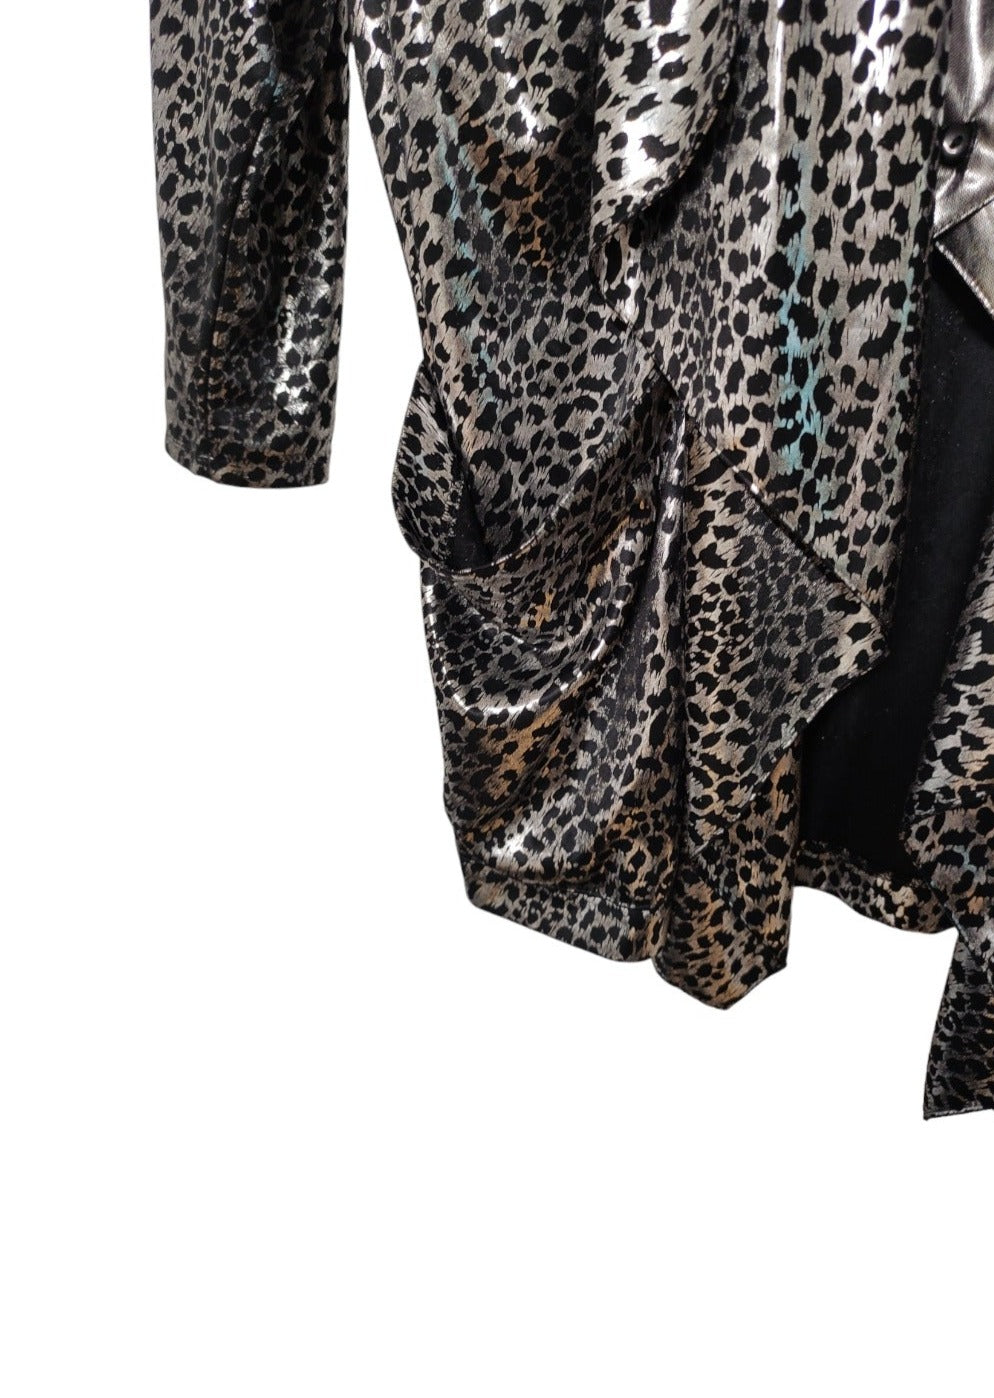 Vintage, Lurex, Γυναικεία Μπλούζα JOY σε Ασημι-Μαύρο χρώμα (XL)